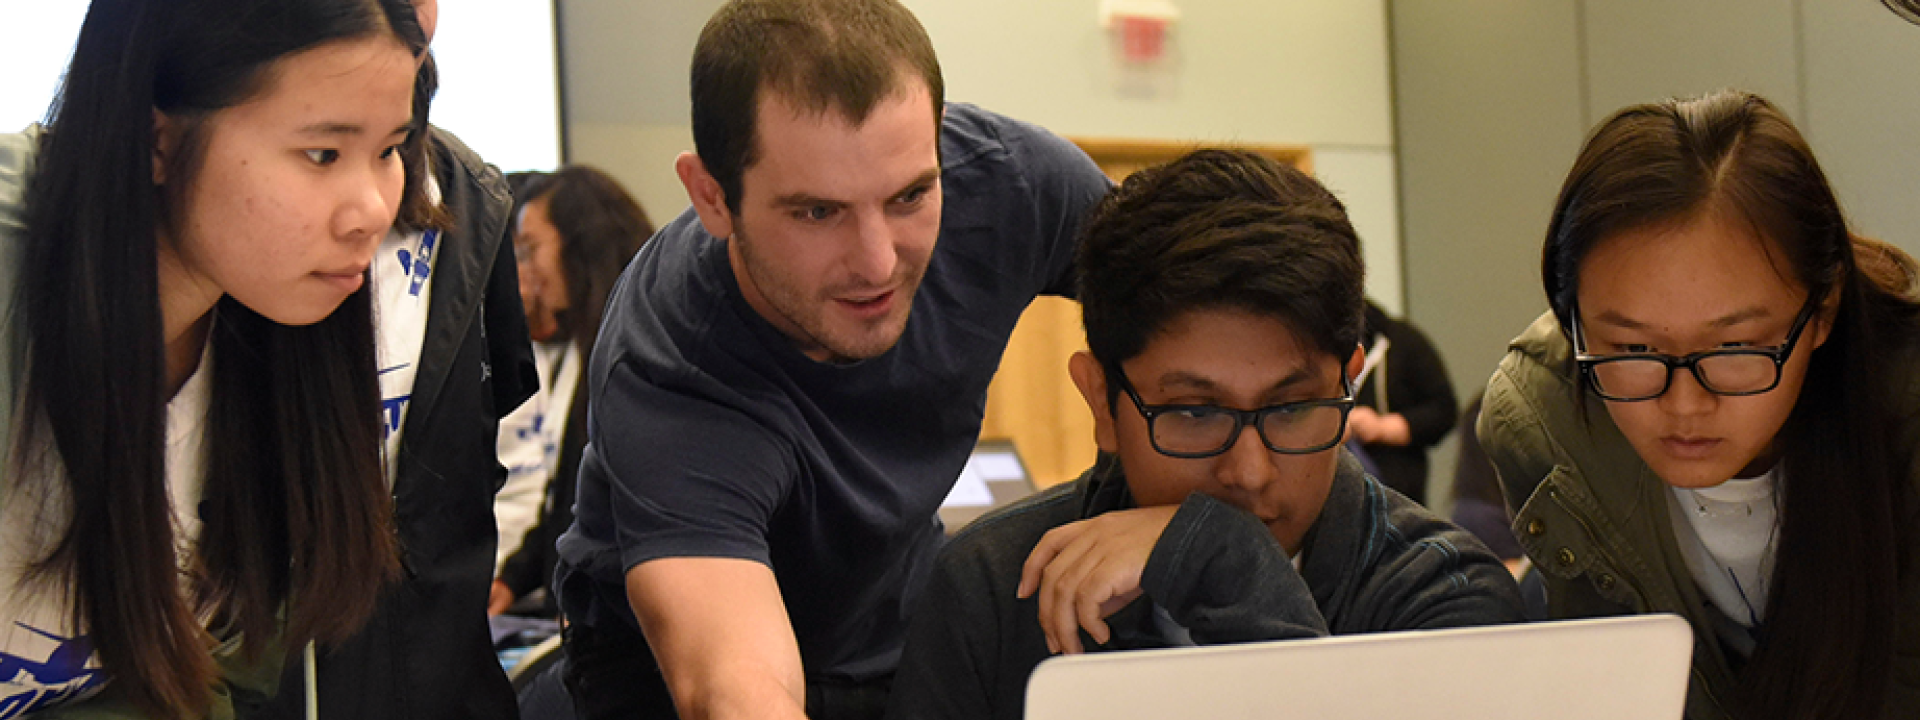 students gaze at laptop with teacher